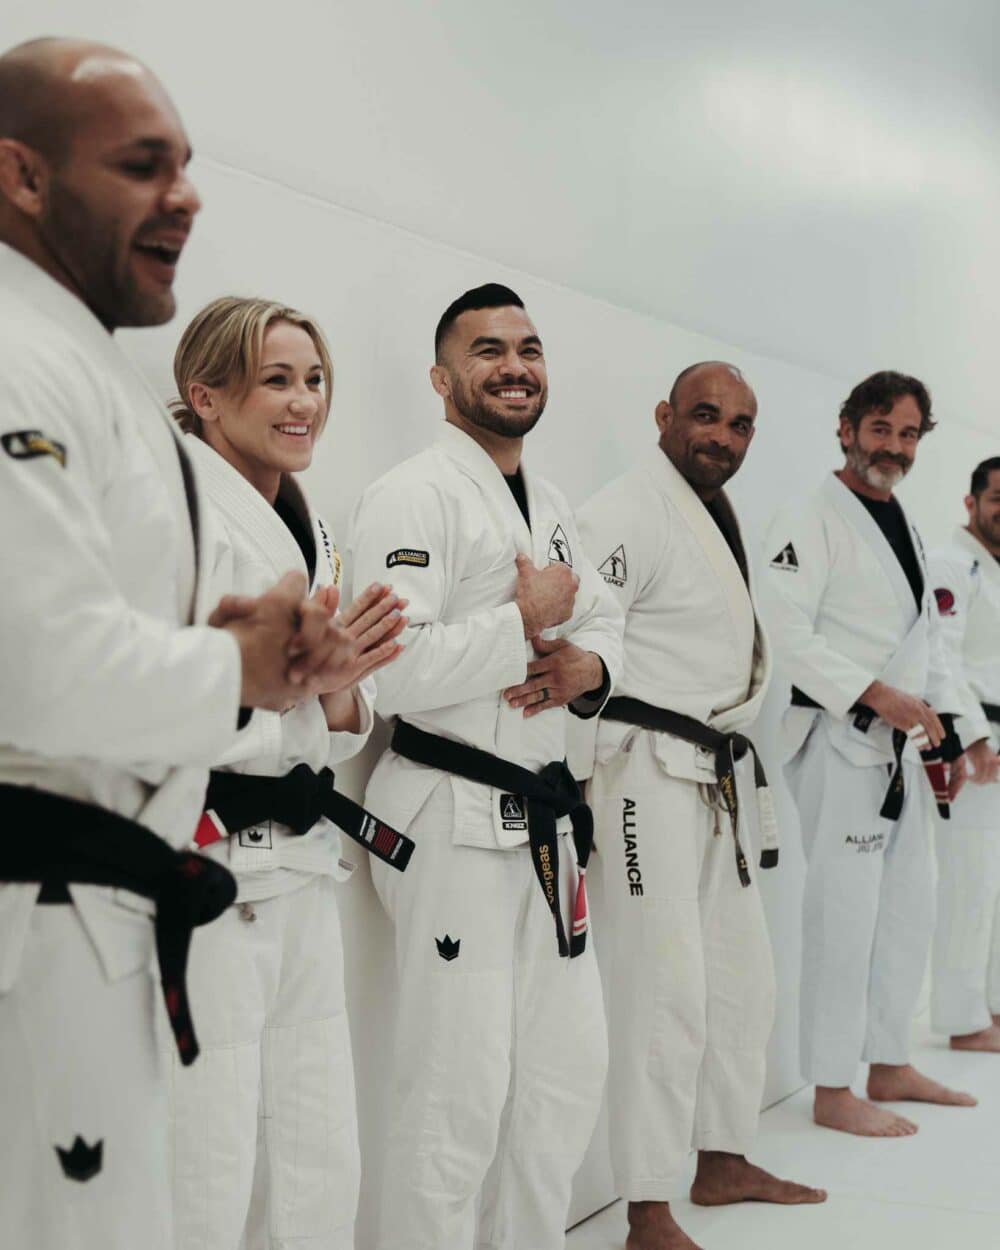 Alliance Jiu-Jitsu Carlsbad Programs image